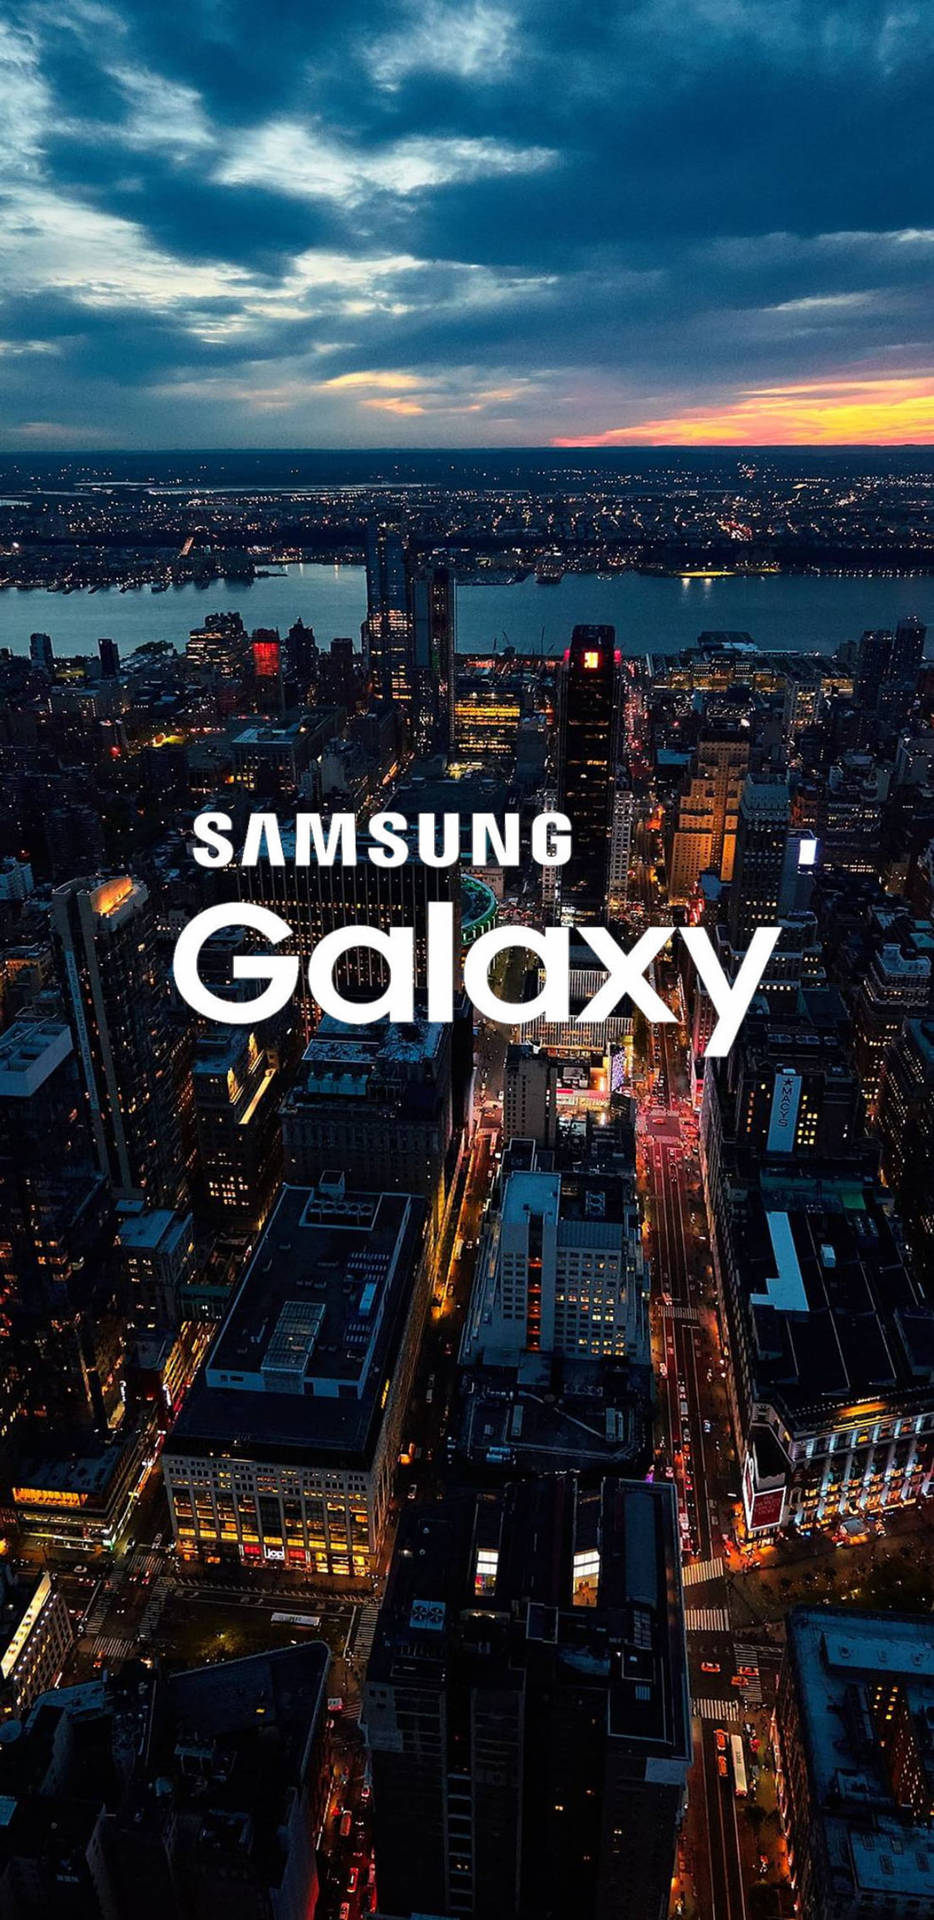 Samsung Galaxy New York City